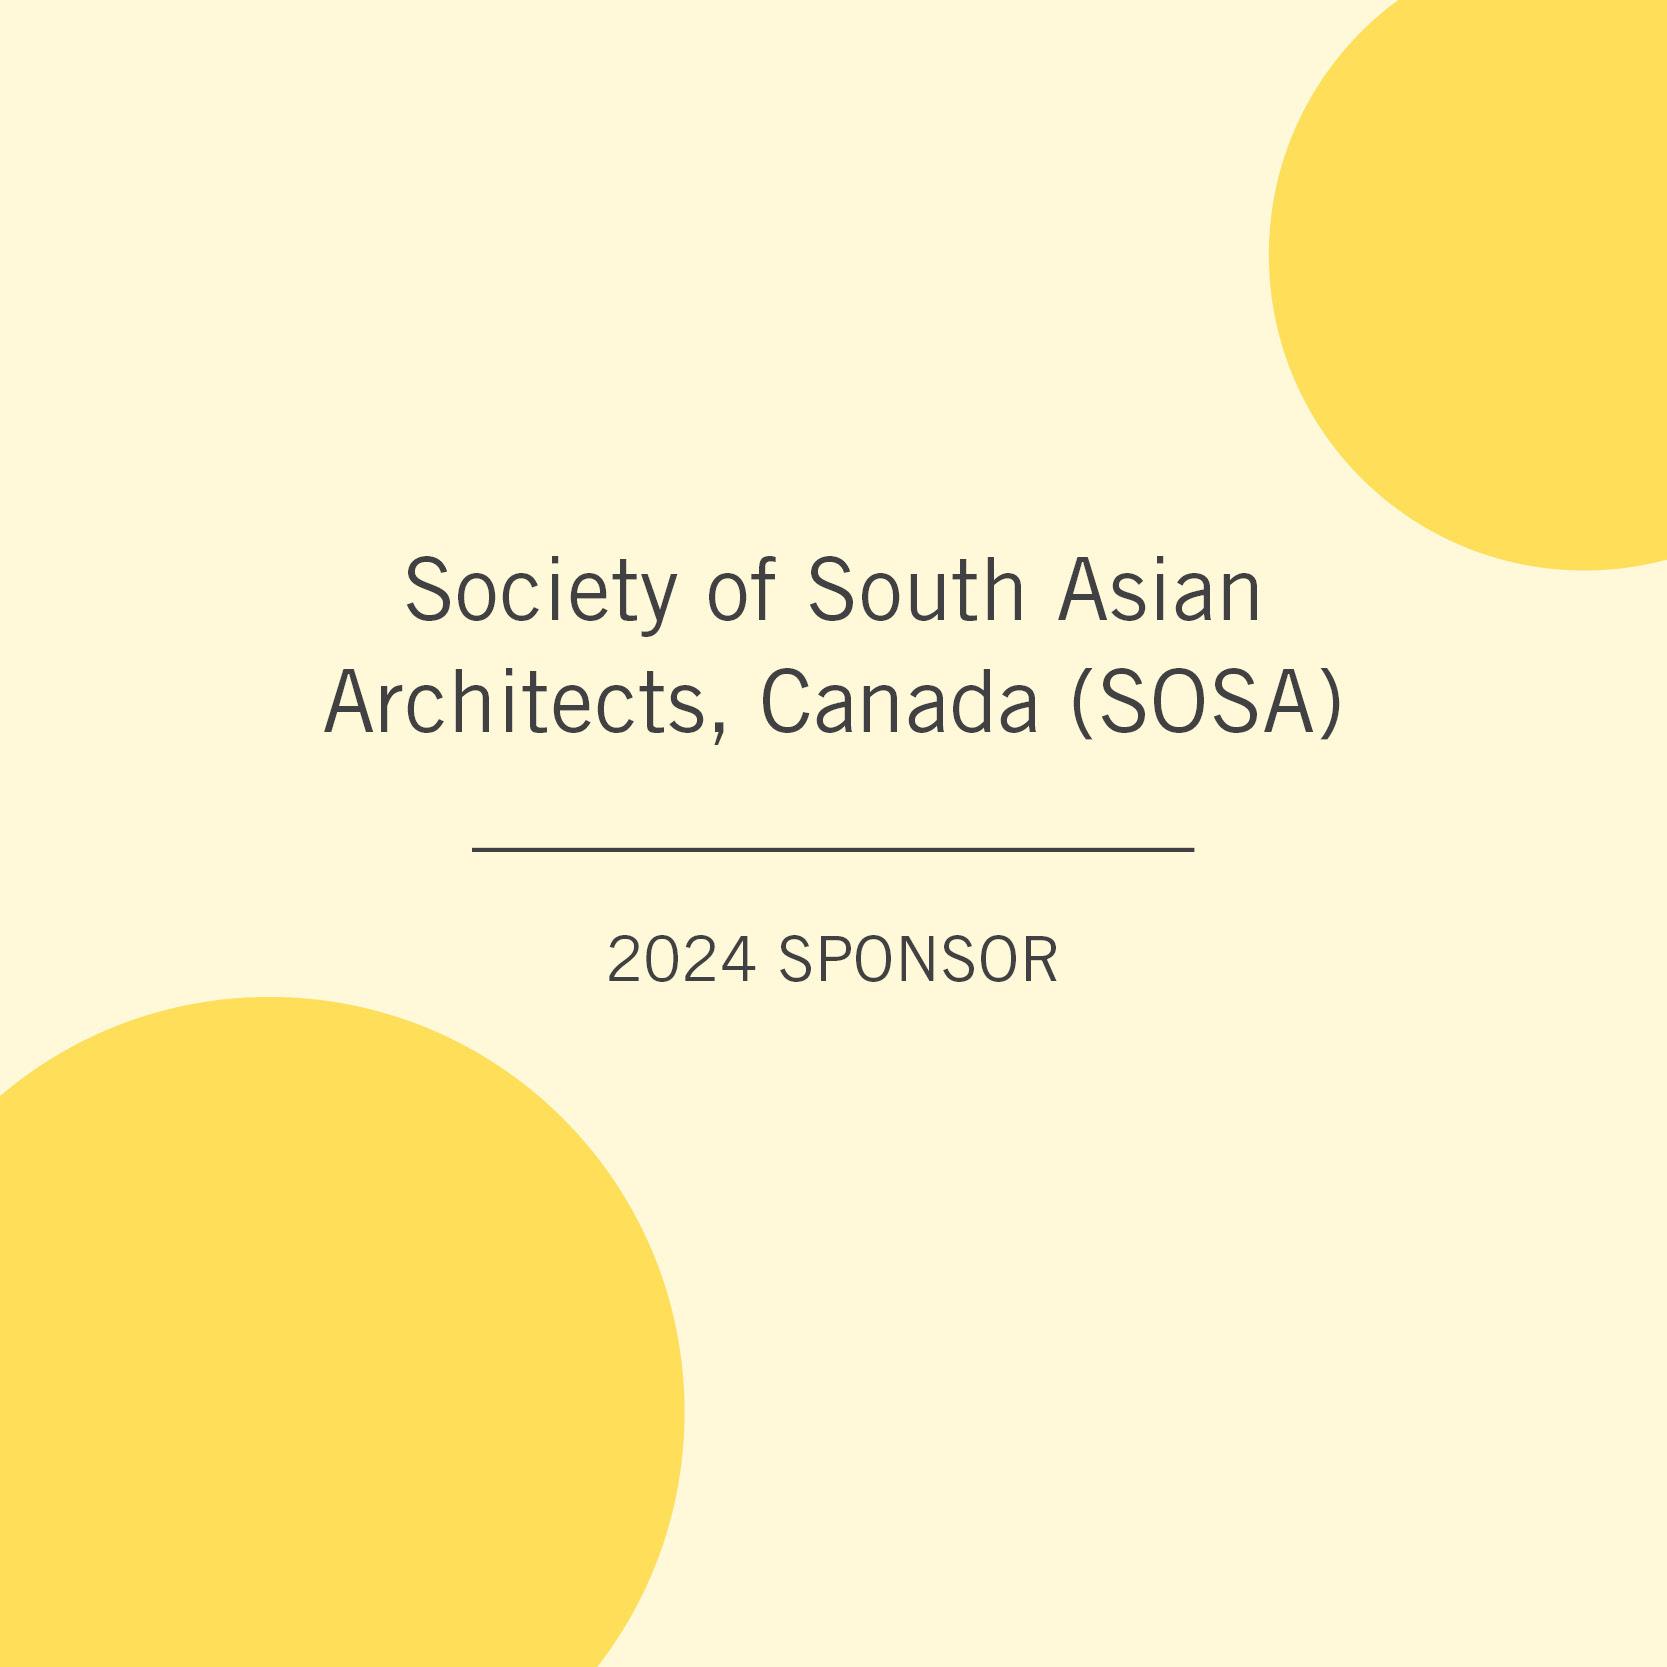 A49 annonce le parrainage de la Society of South Asian Architects, Canada